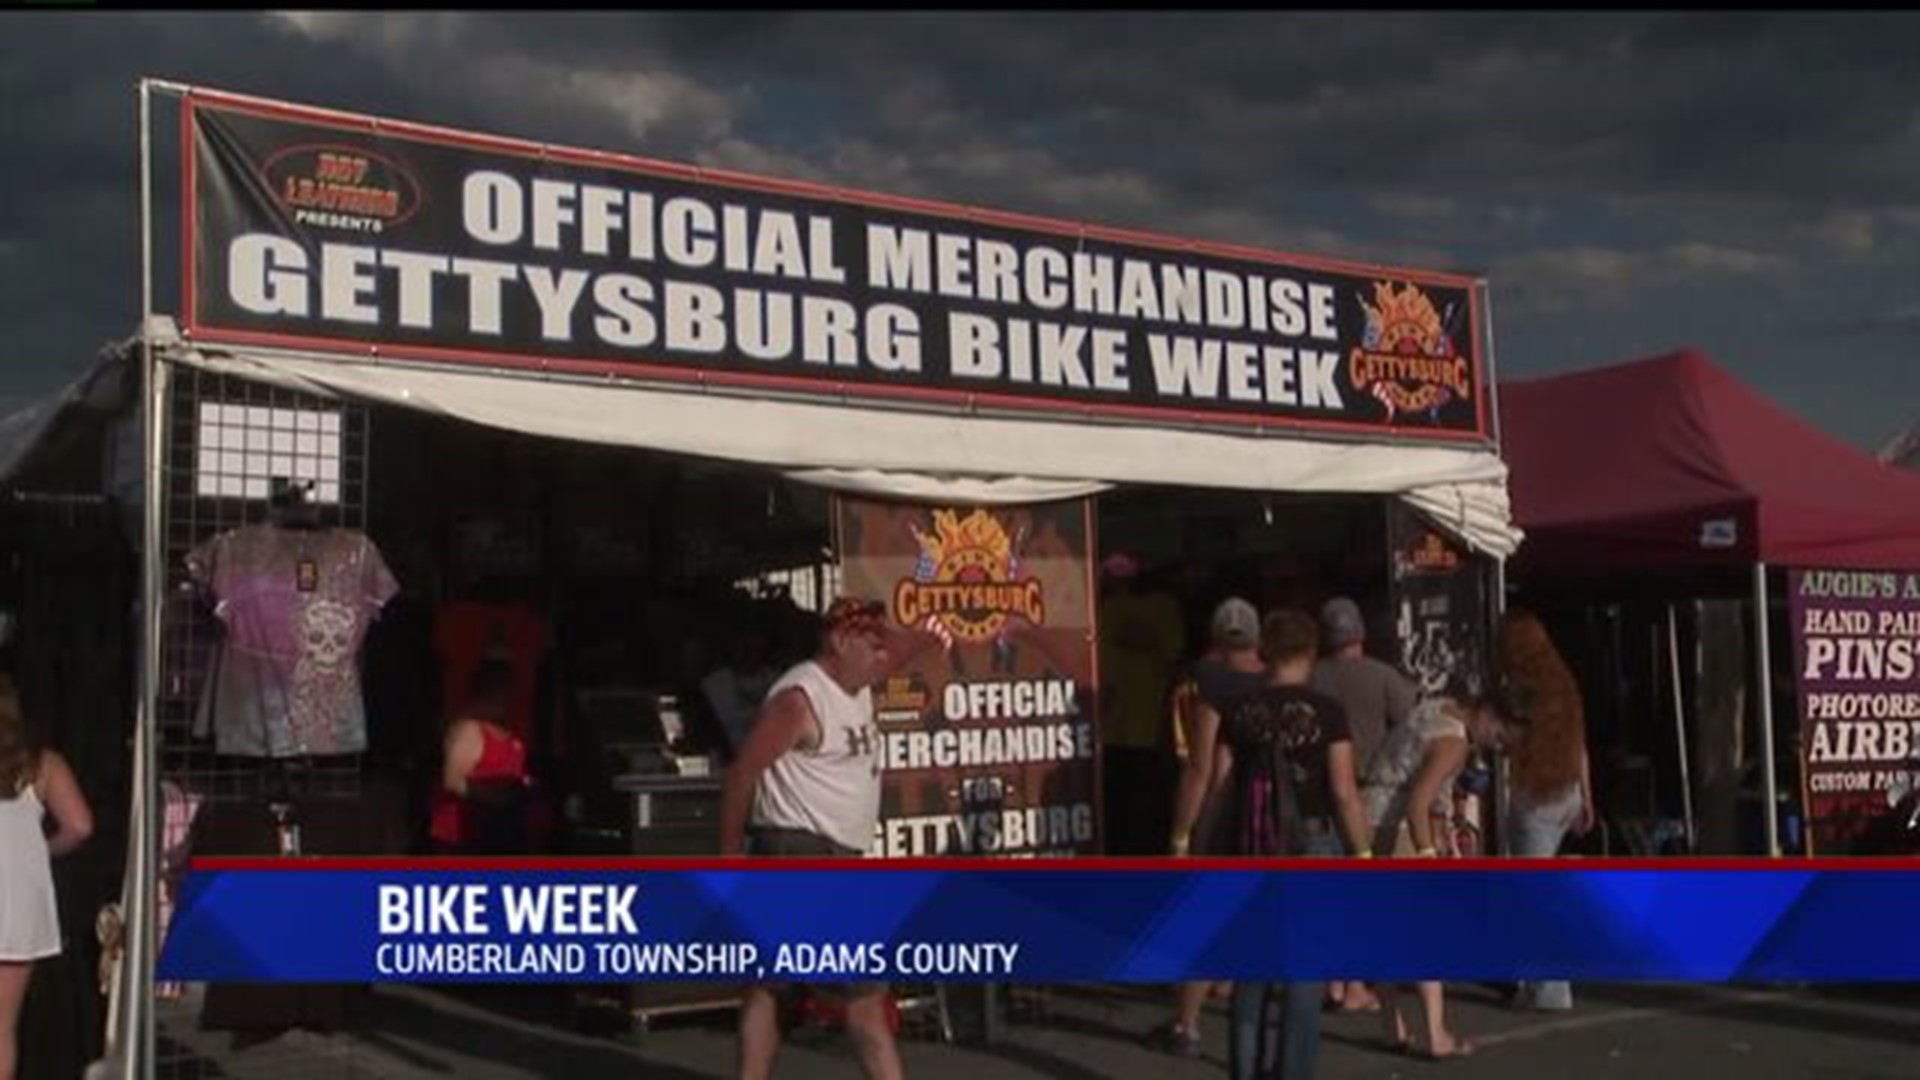 Gettysburg Bike Week canceled due to COVID19 safety concerns